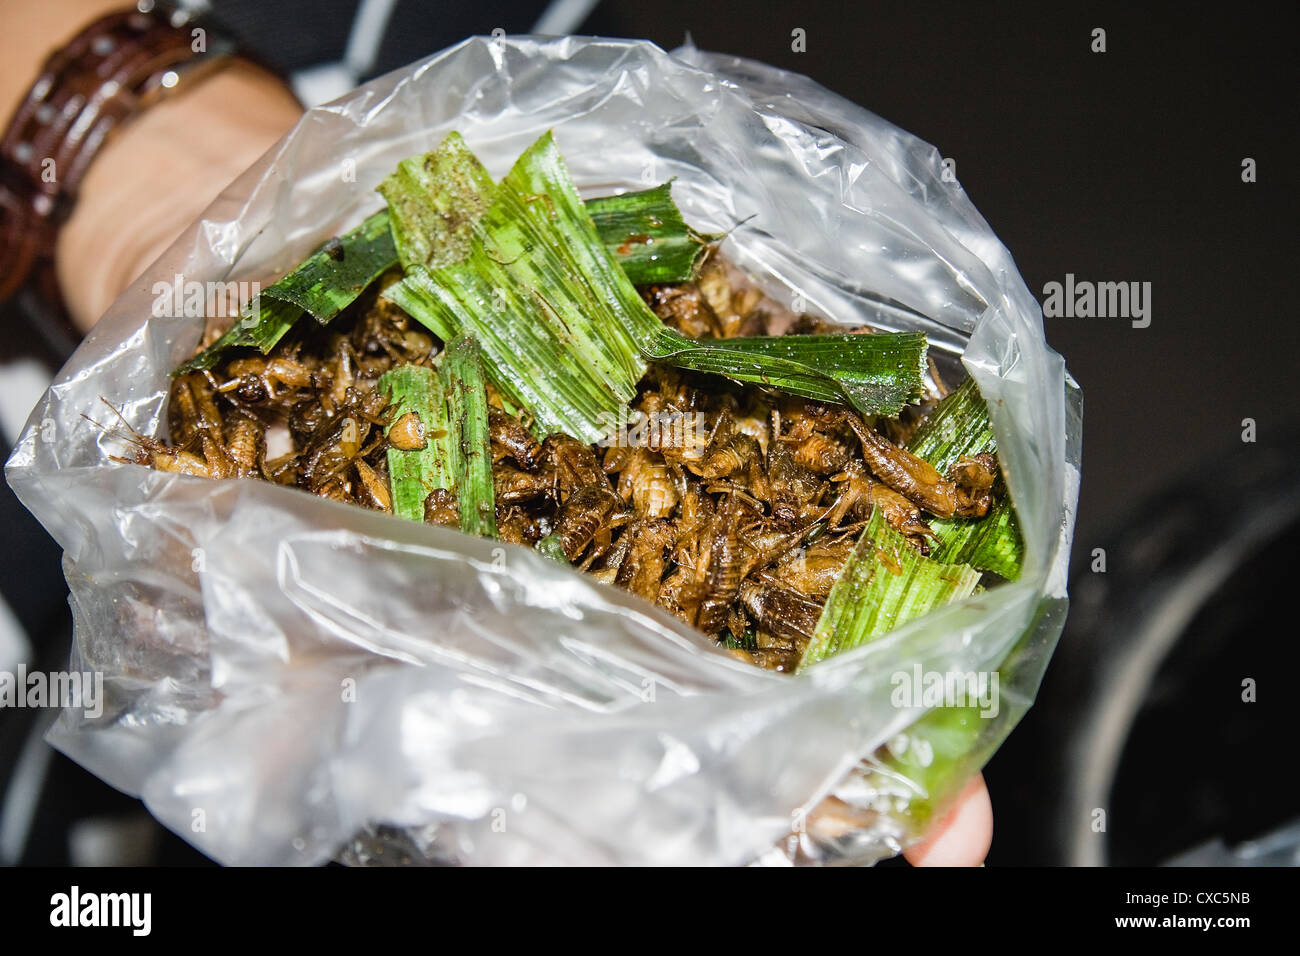 Sac en plastique plein d'insectes comestibles en Thaïlande Banque D'Images